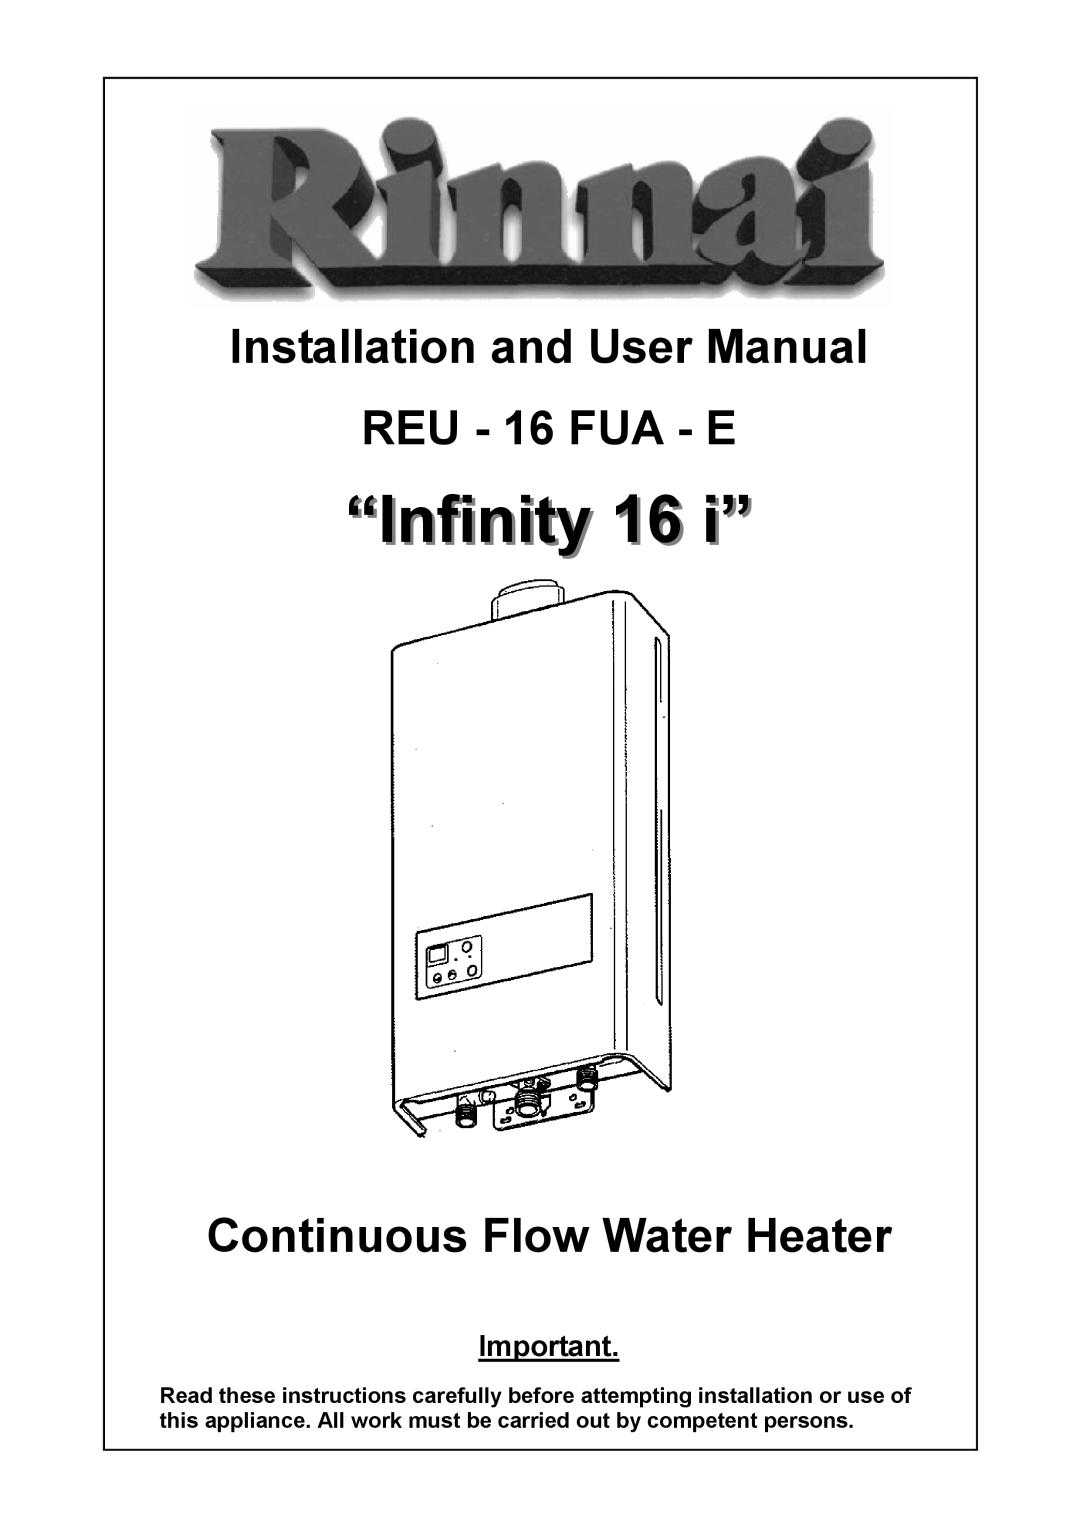 Rinnai REU - 16 FUA - E user manual “Infinity 16 i”, Continuous Flow Water Heater 